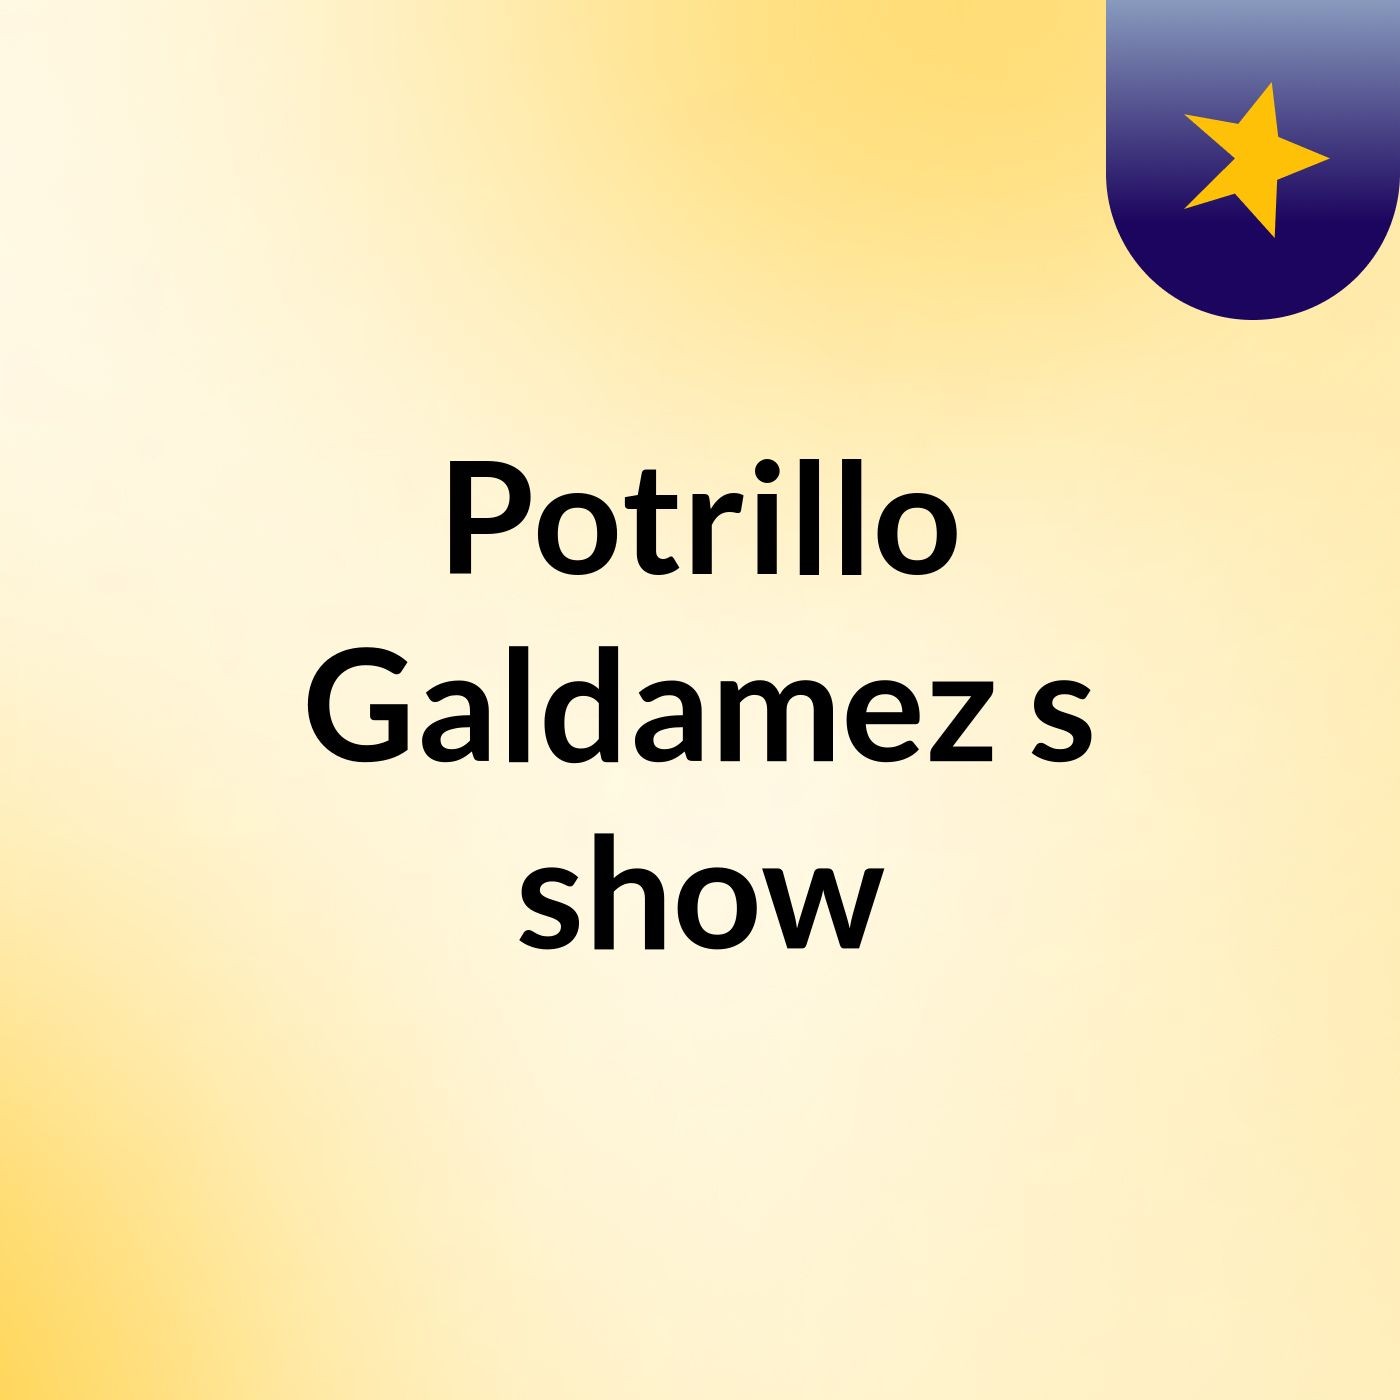 Potrillo Galdamez's show